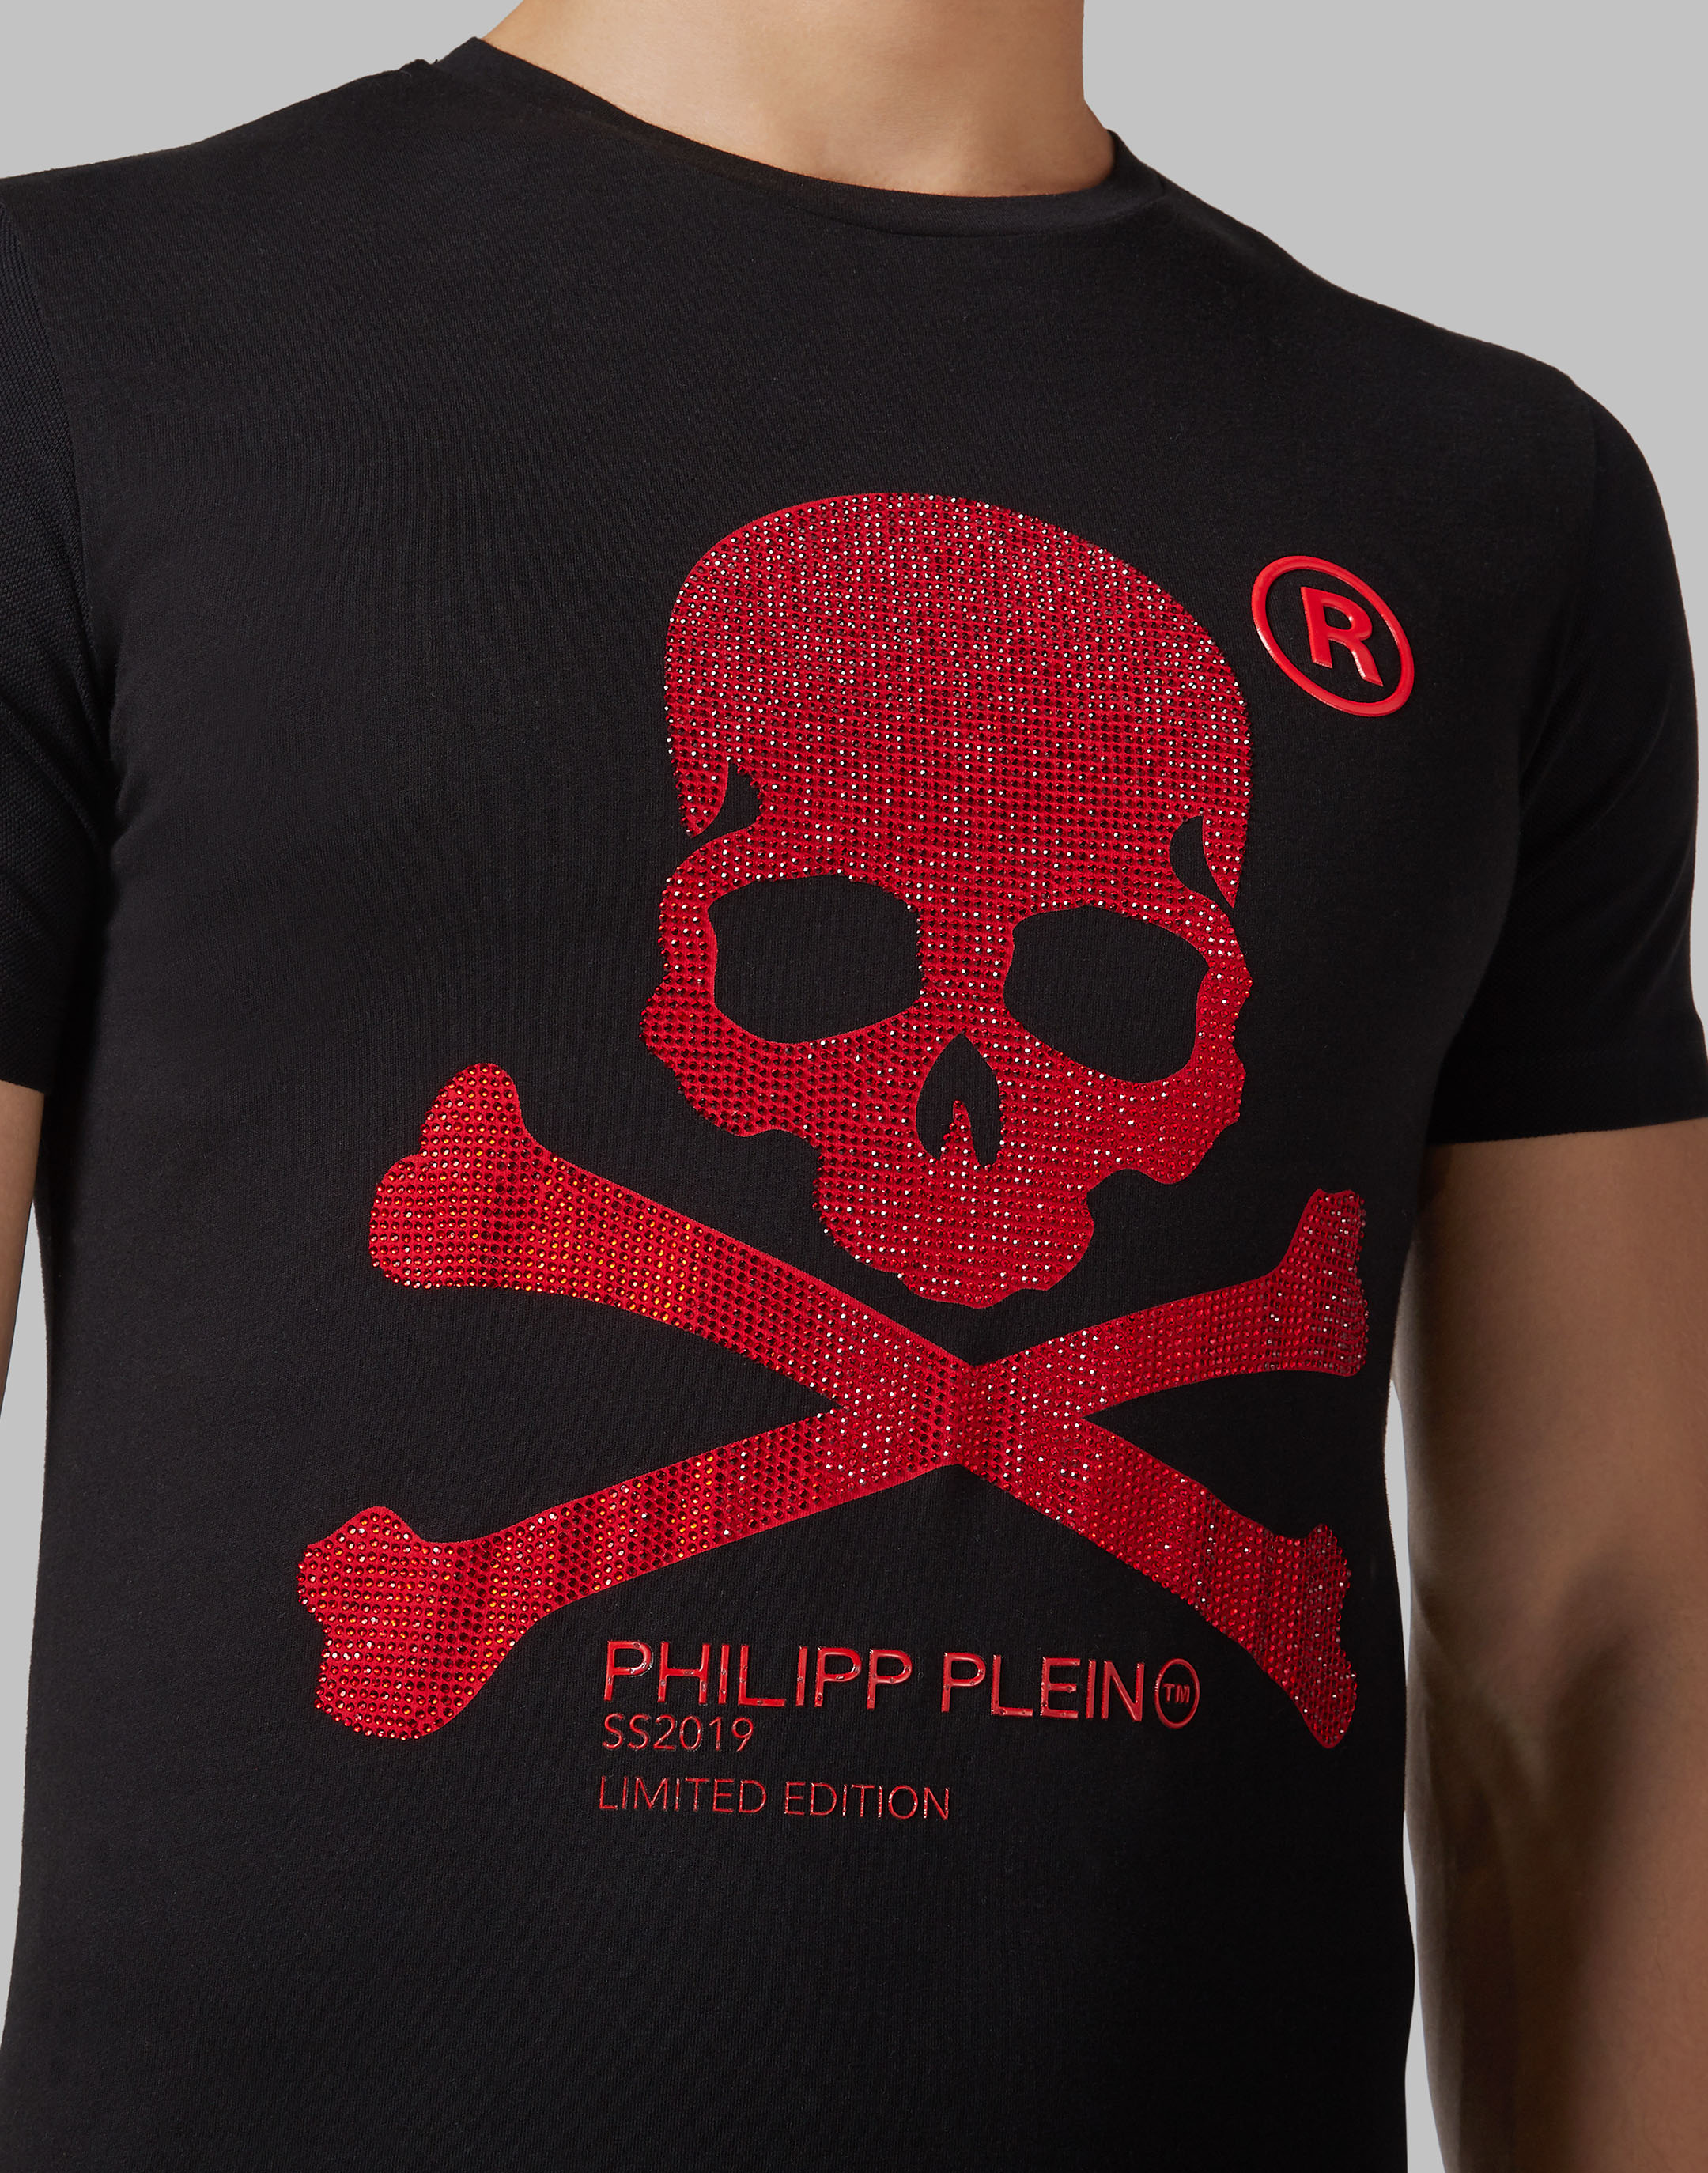 T-shirt Black Cut Round Neck Skull | Philipp Plein Outlet